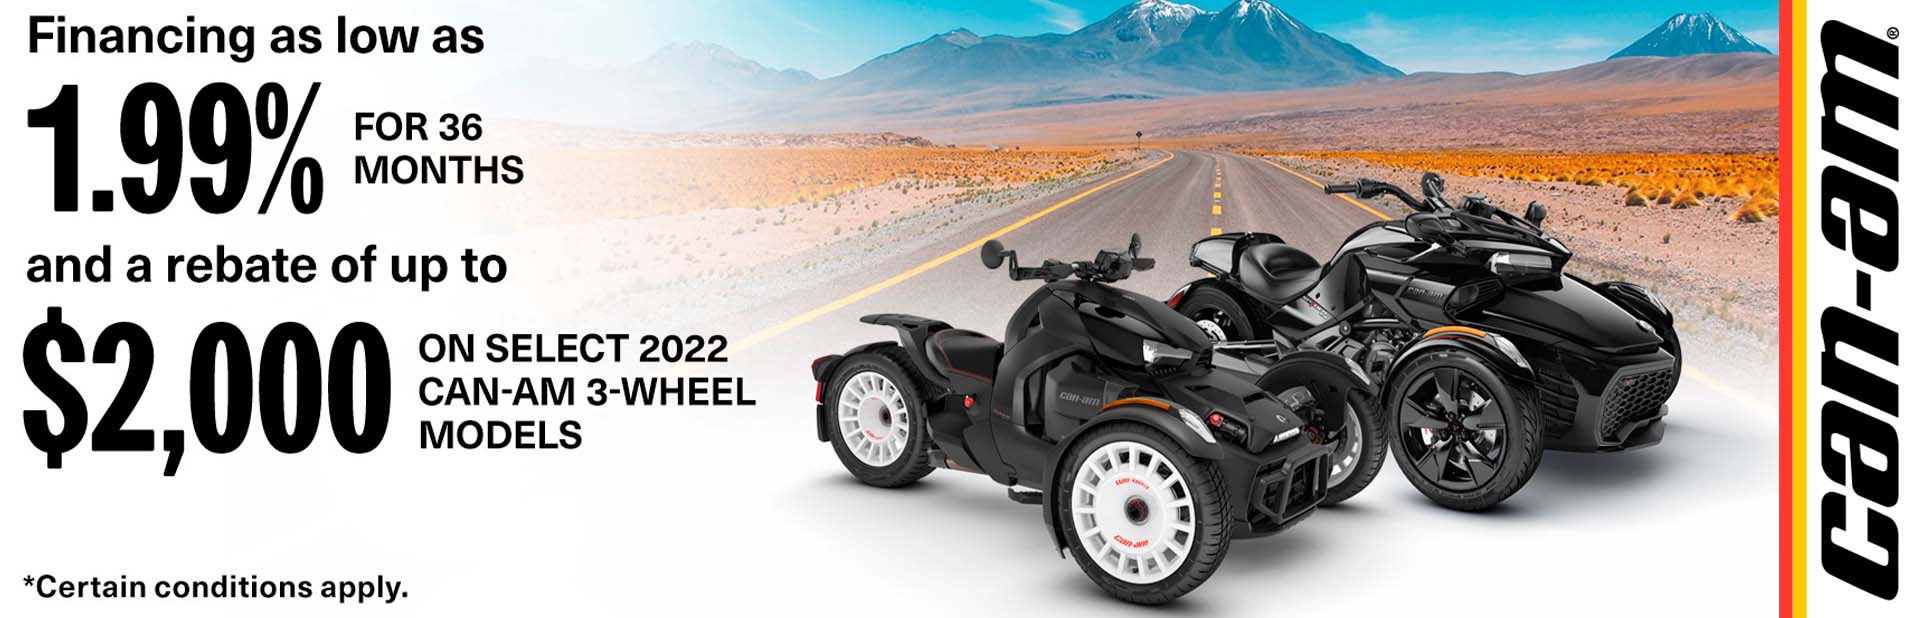 2022 Ryker Rally or Spyder models